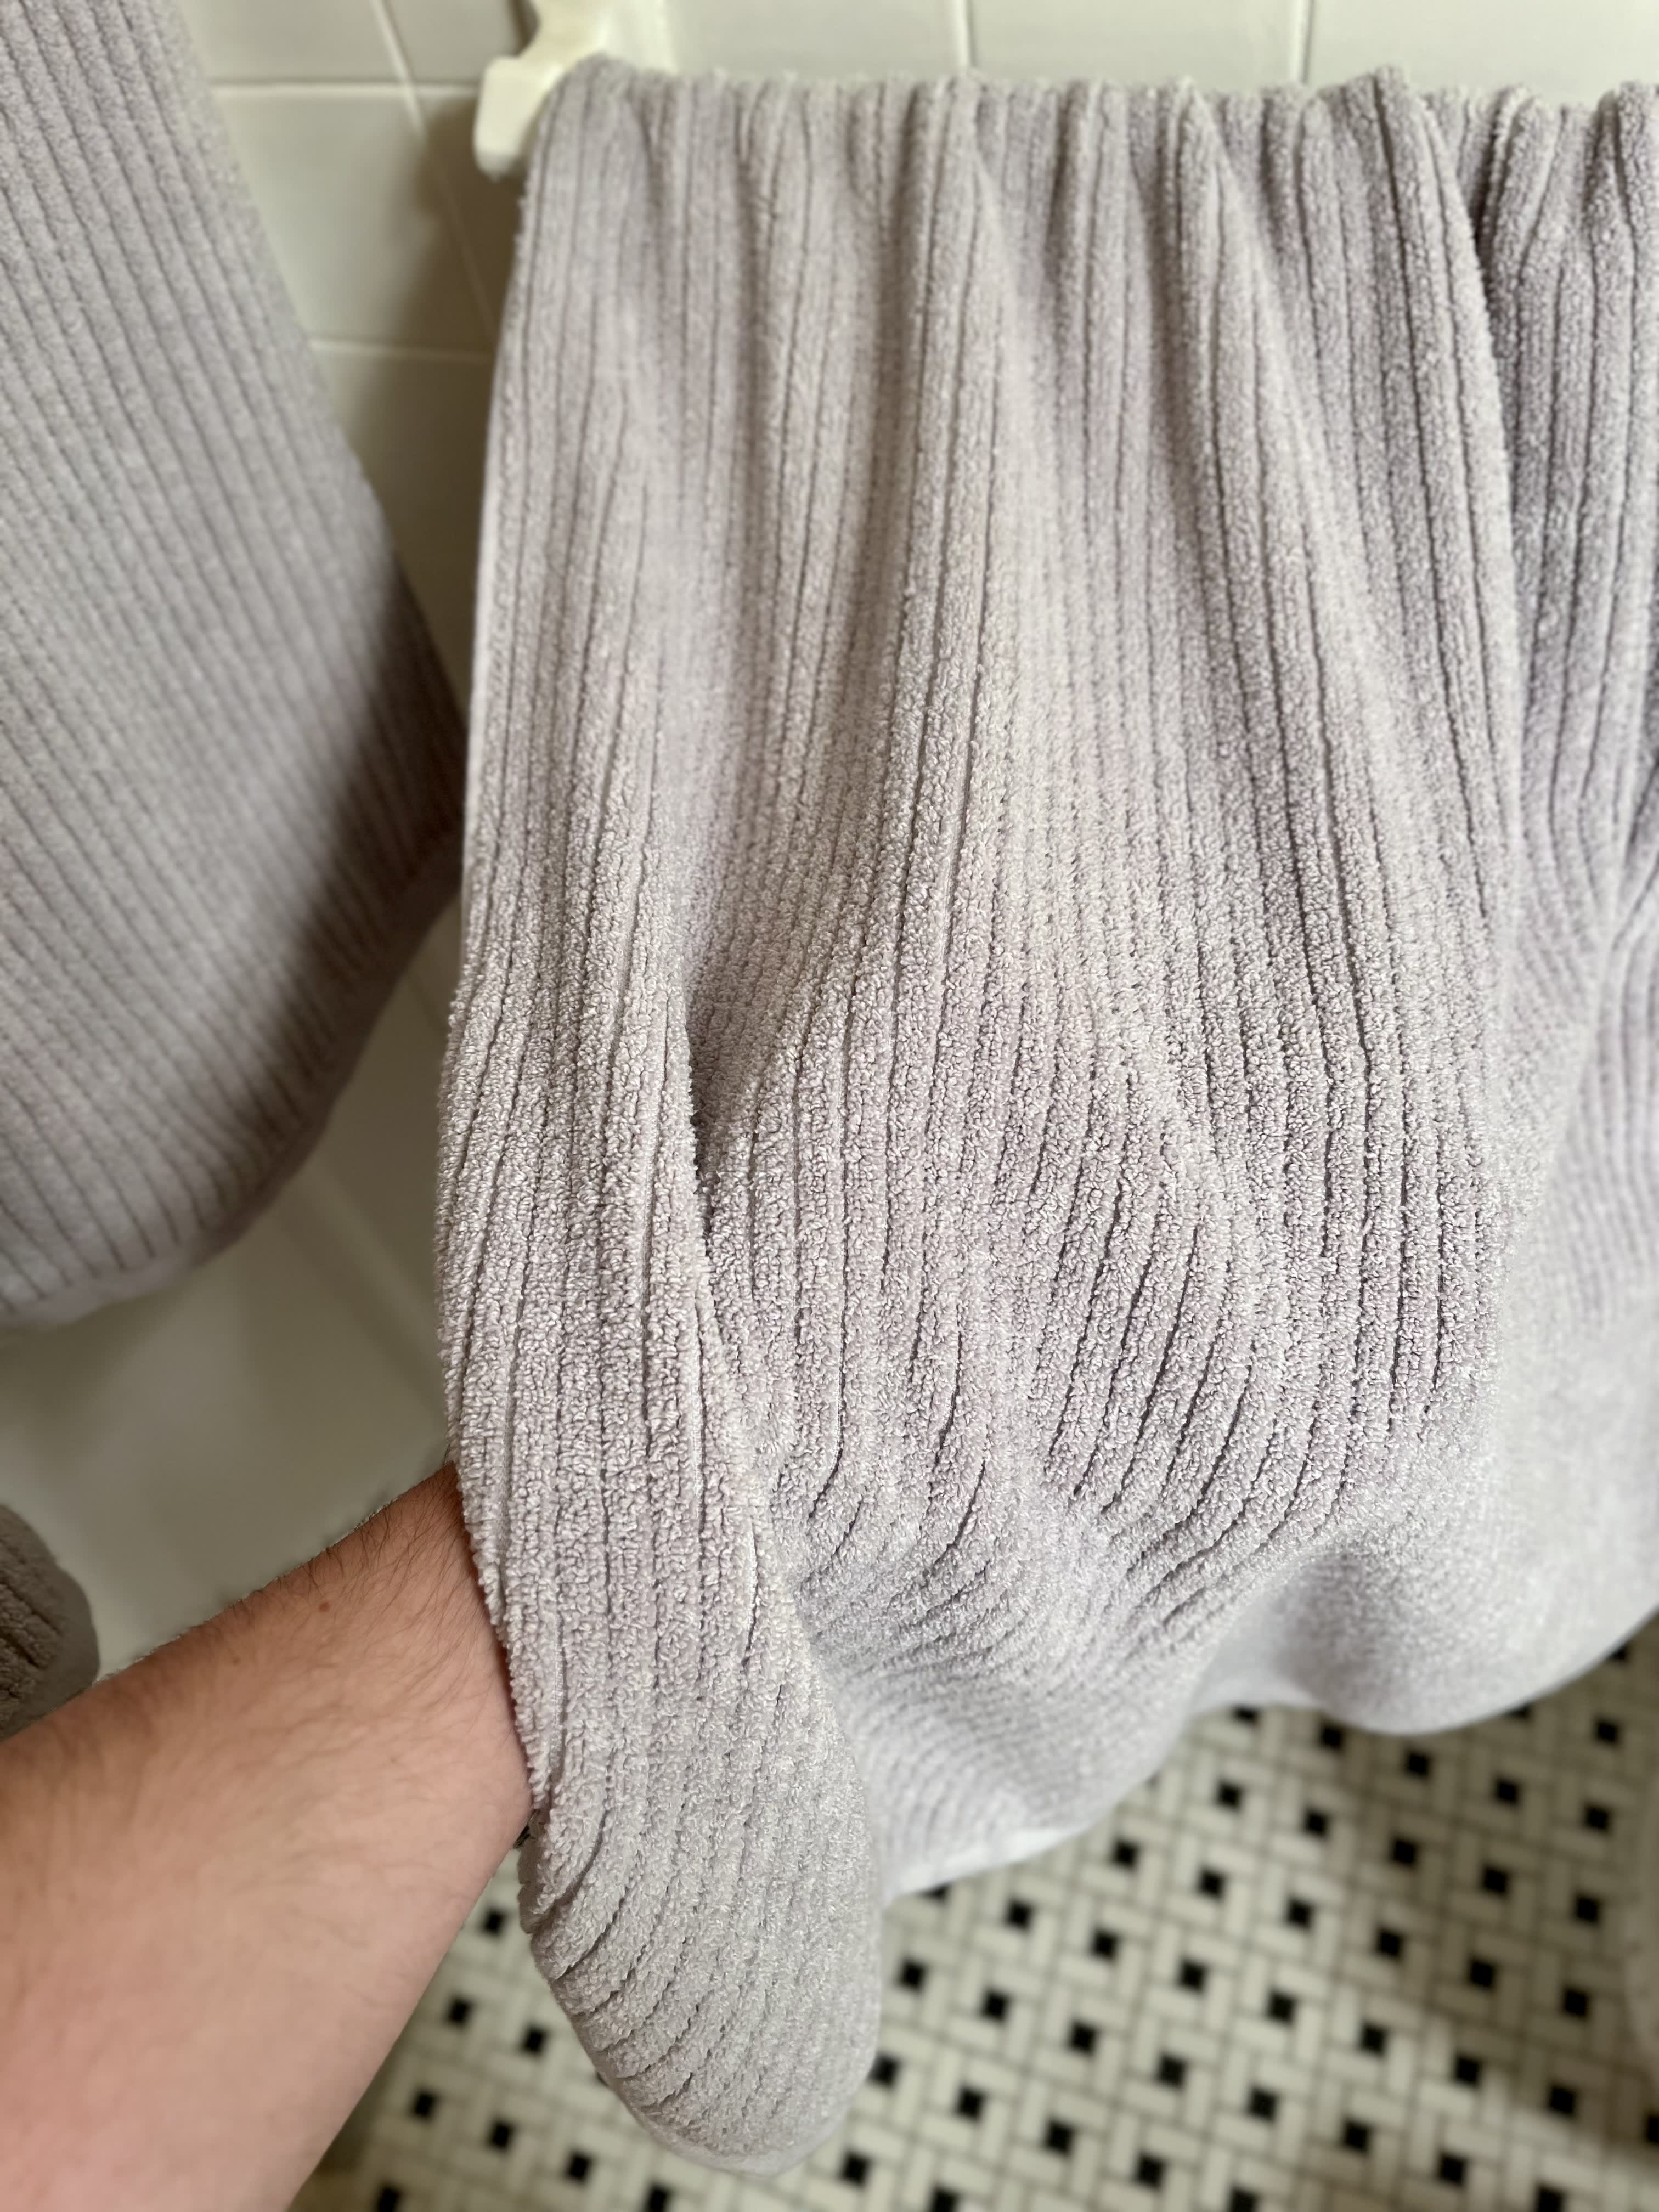 Luxome Plush Performance Bath Towel Review